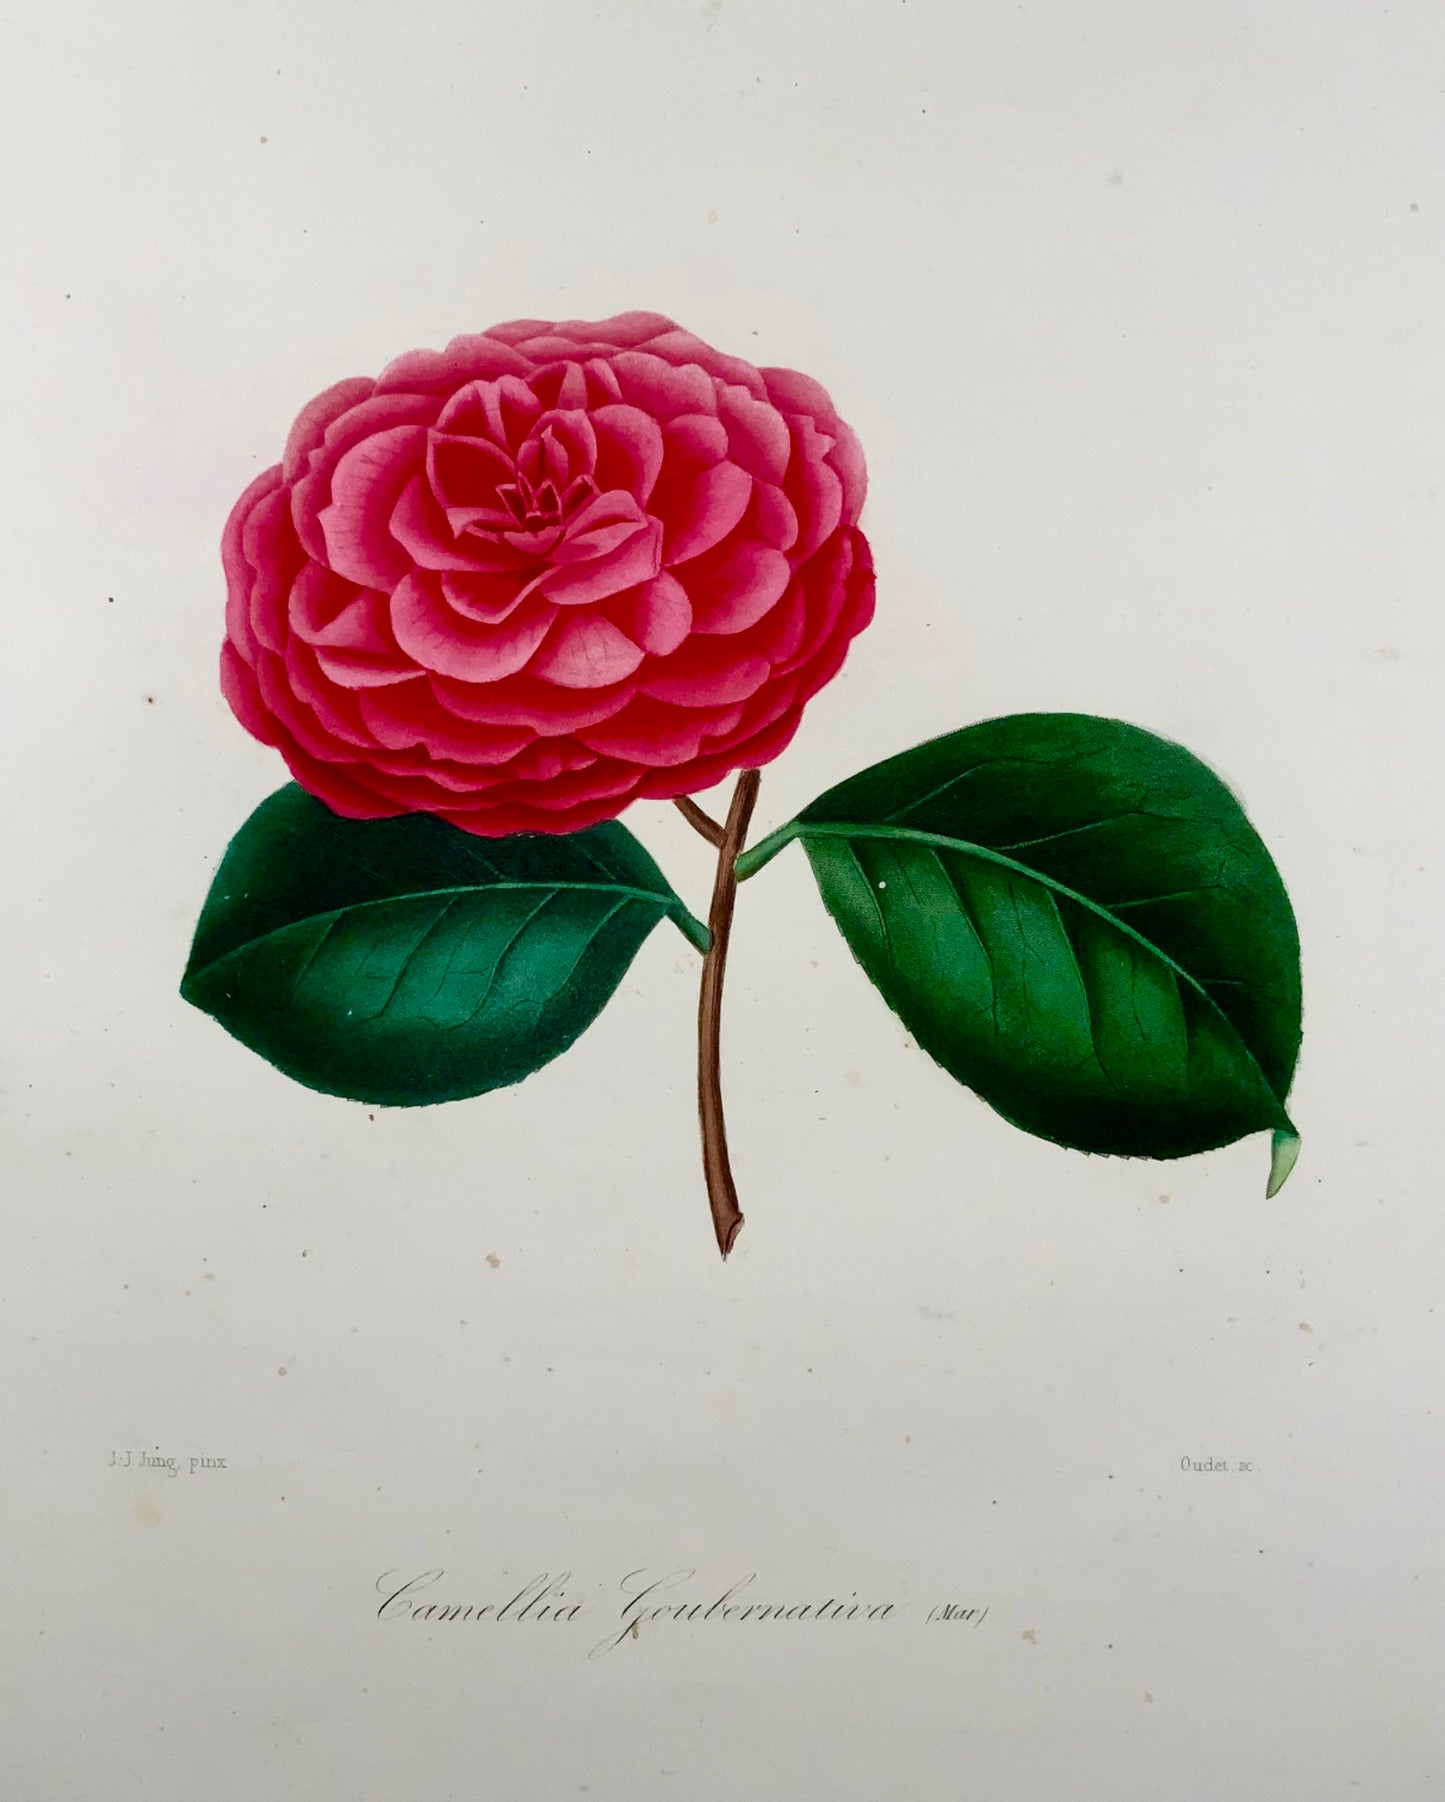 1841 Camellia Goubernativa, drawn by J J Jung, engraved by Oudet, Berlèse, botany